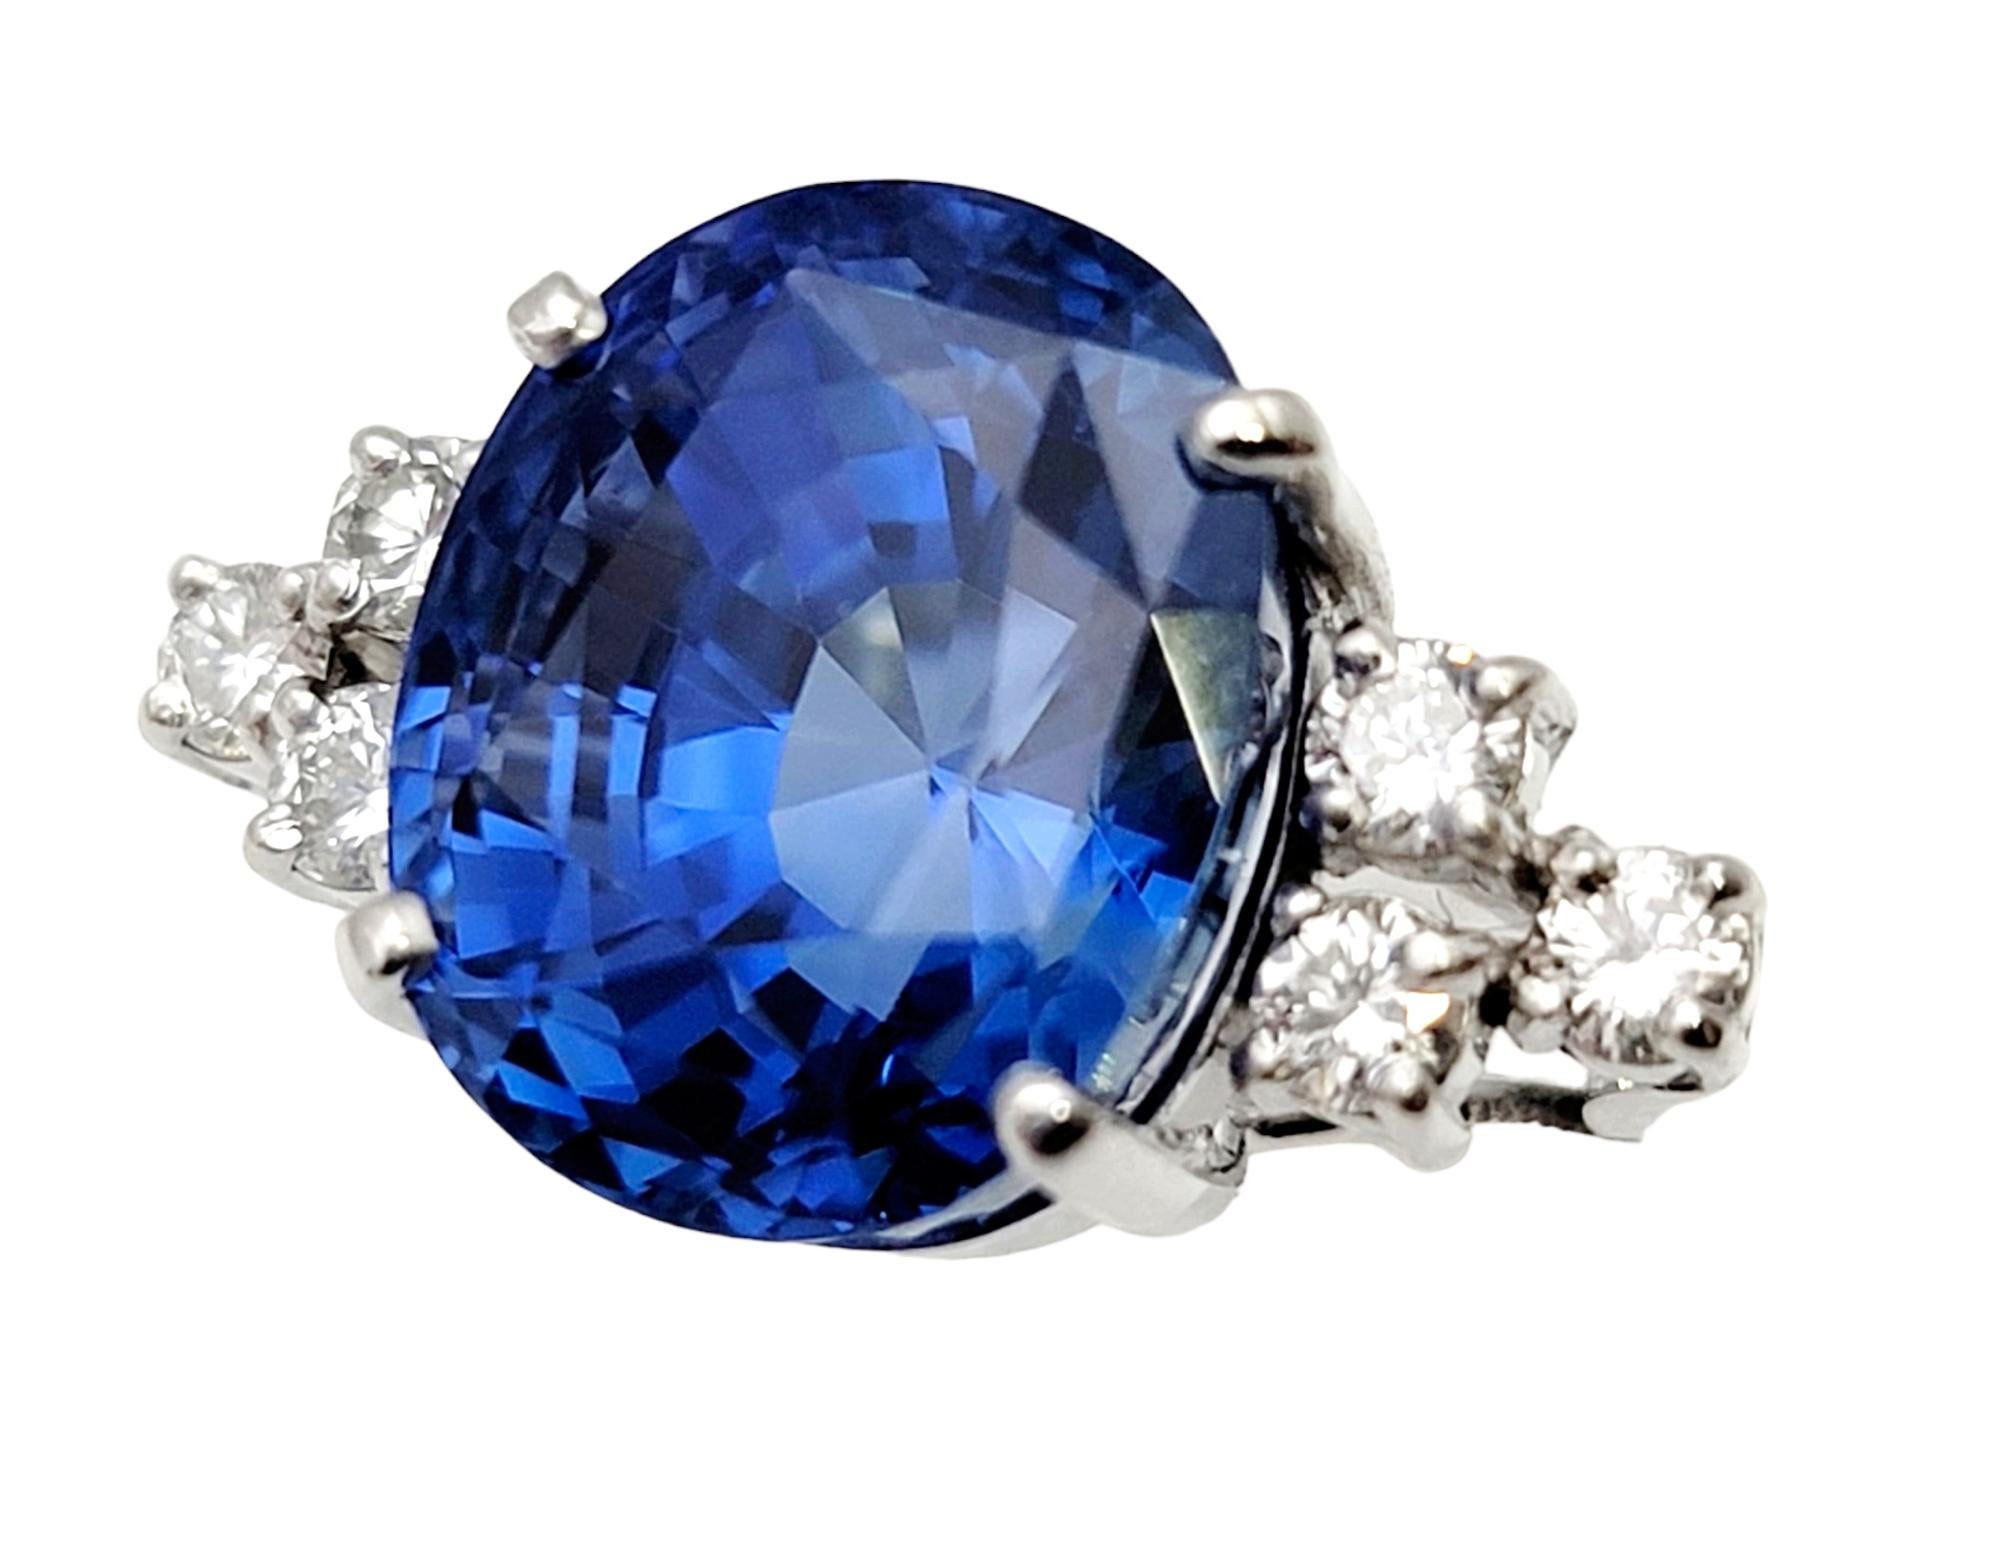 Oval Cut Impressive 15.35 Carat Rare Untreated Oval Ceylon Sapphire and Diamond Ring For Sale